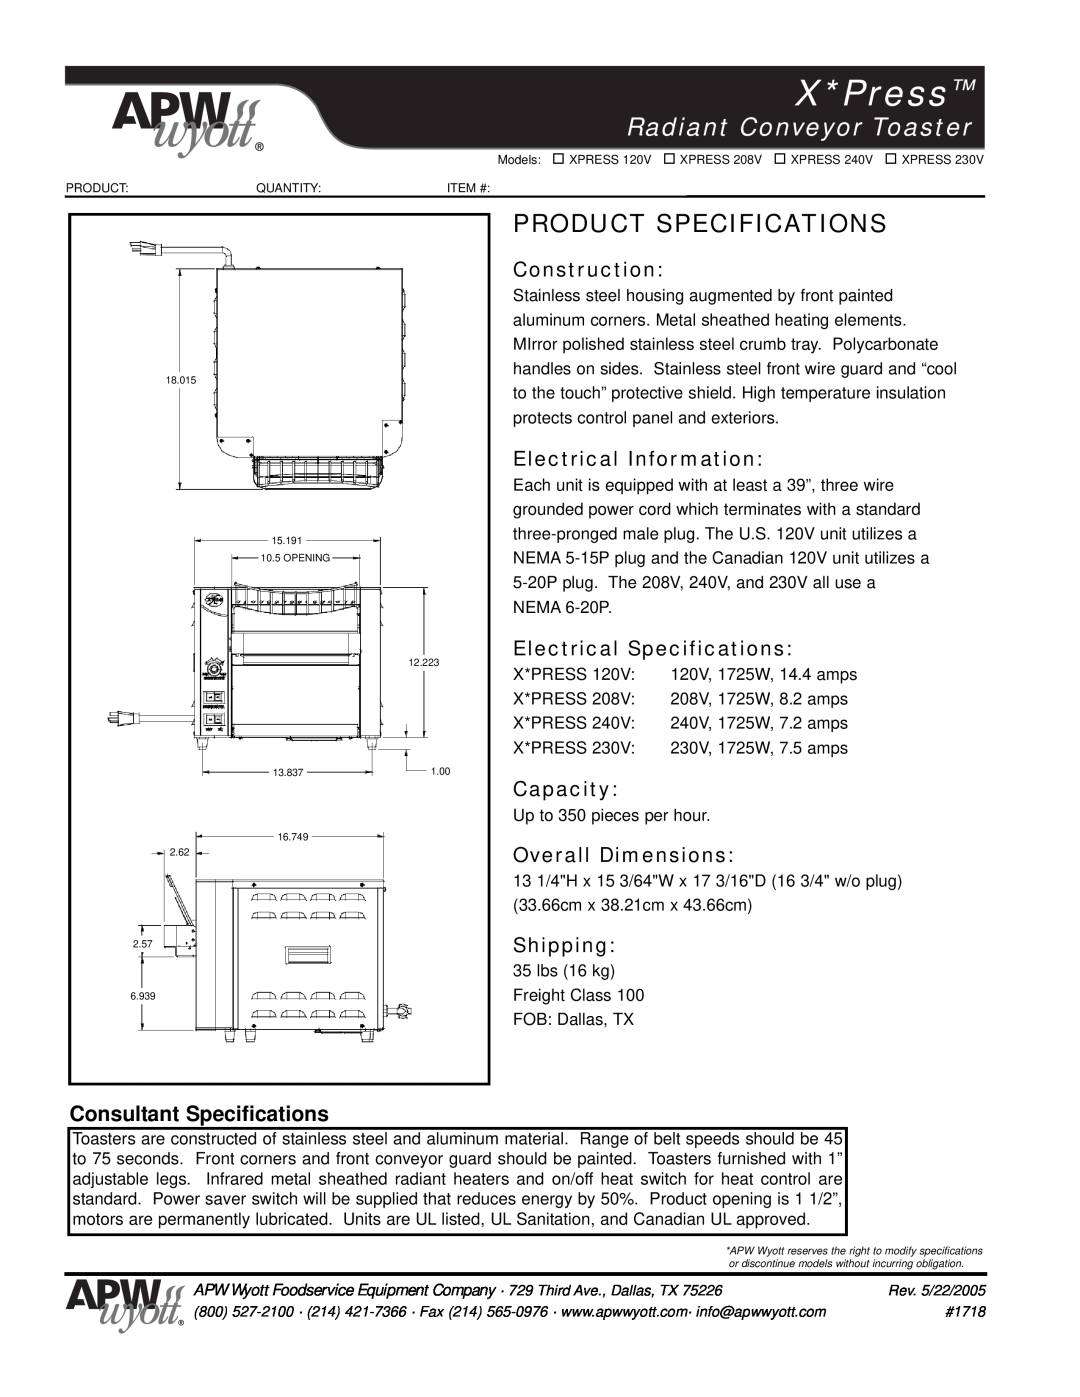 APW Wyott XPRESS 120V Product Specifications, Construction, Electrical Information, Electrical Specifications, Capacity 